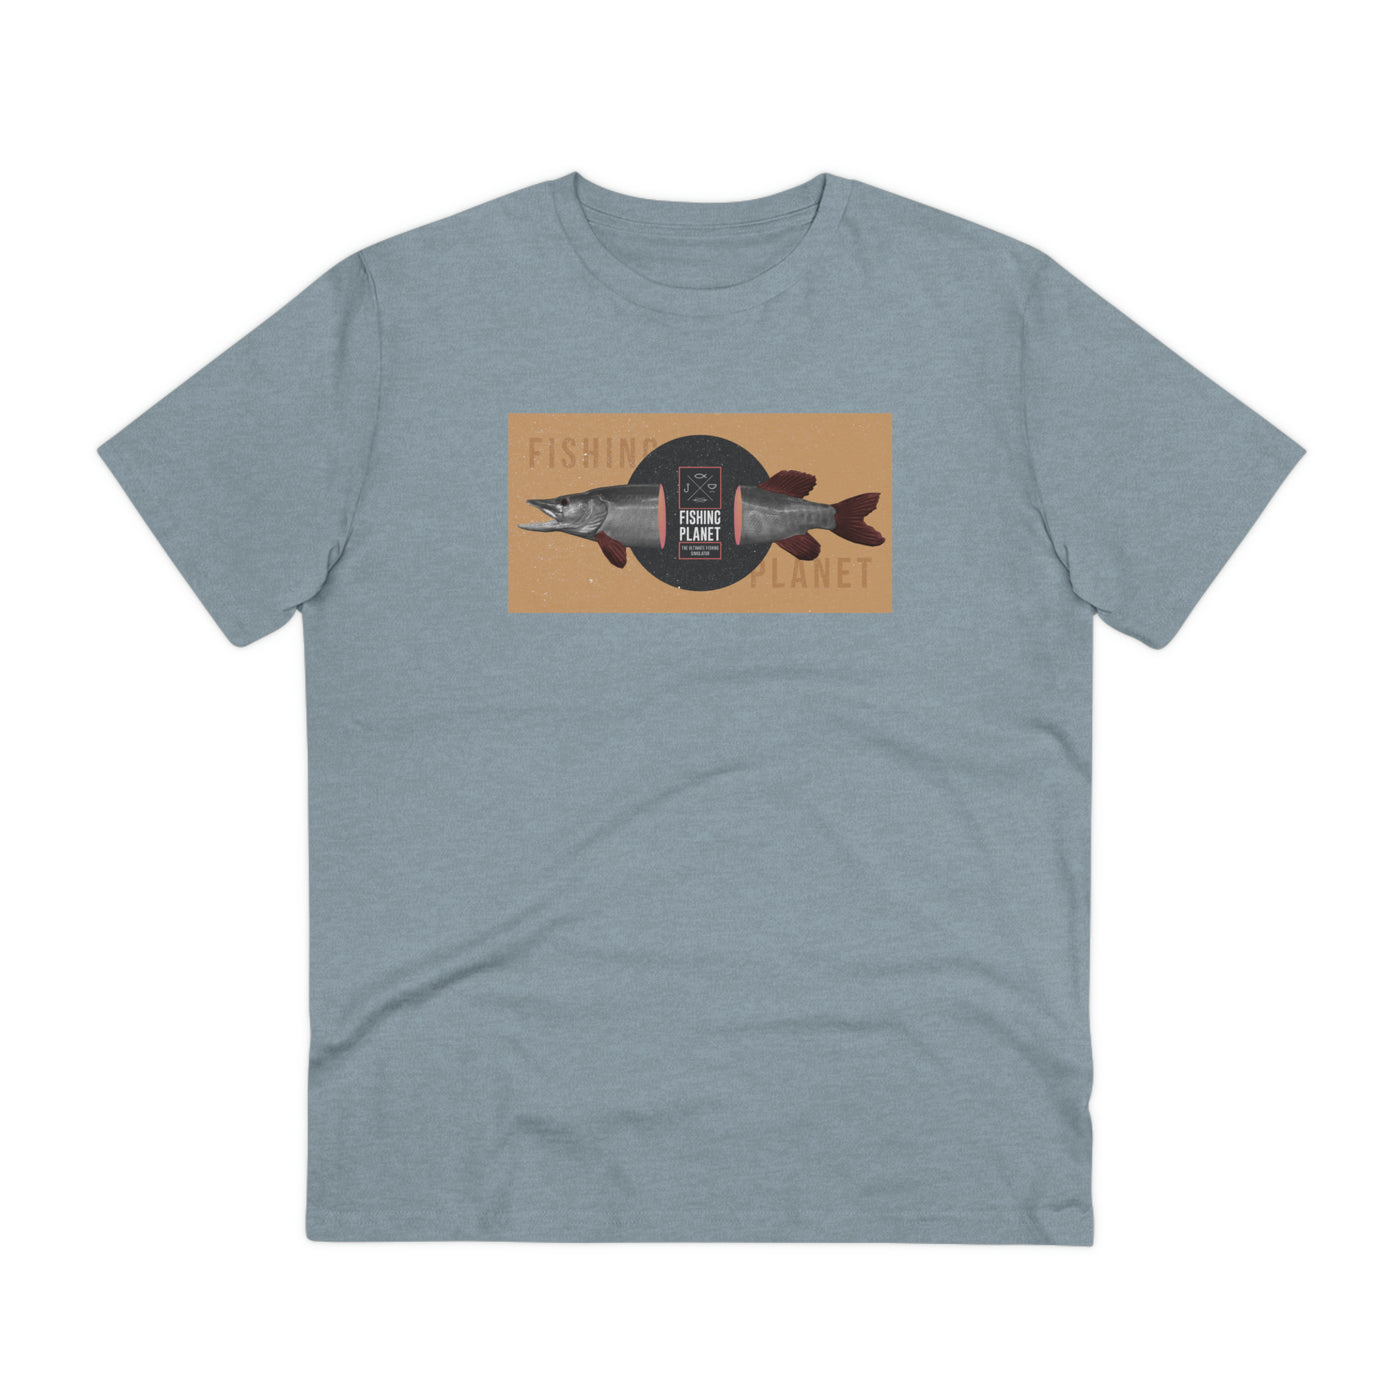 Fishing Planet Half Fish T-shirt